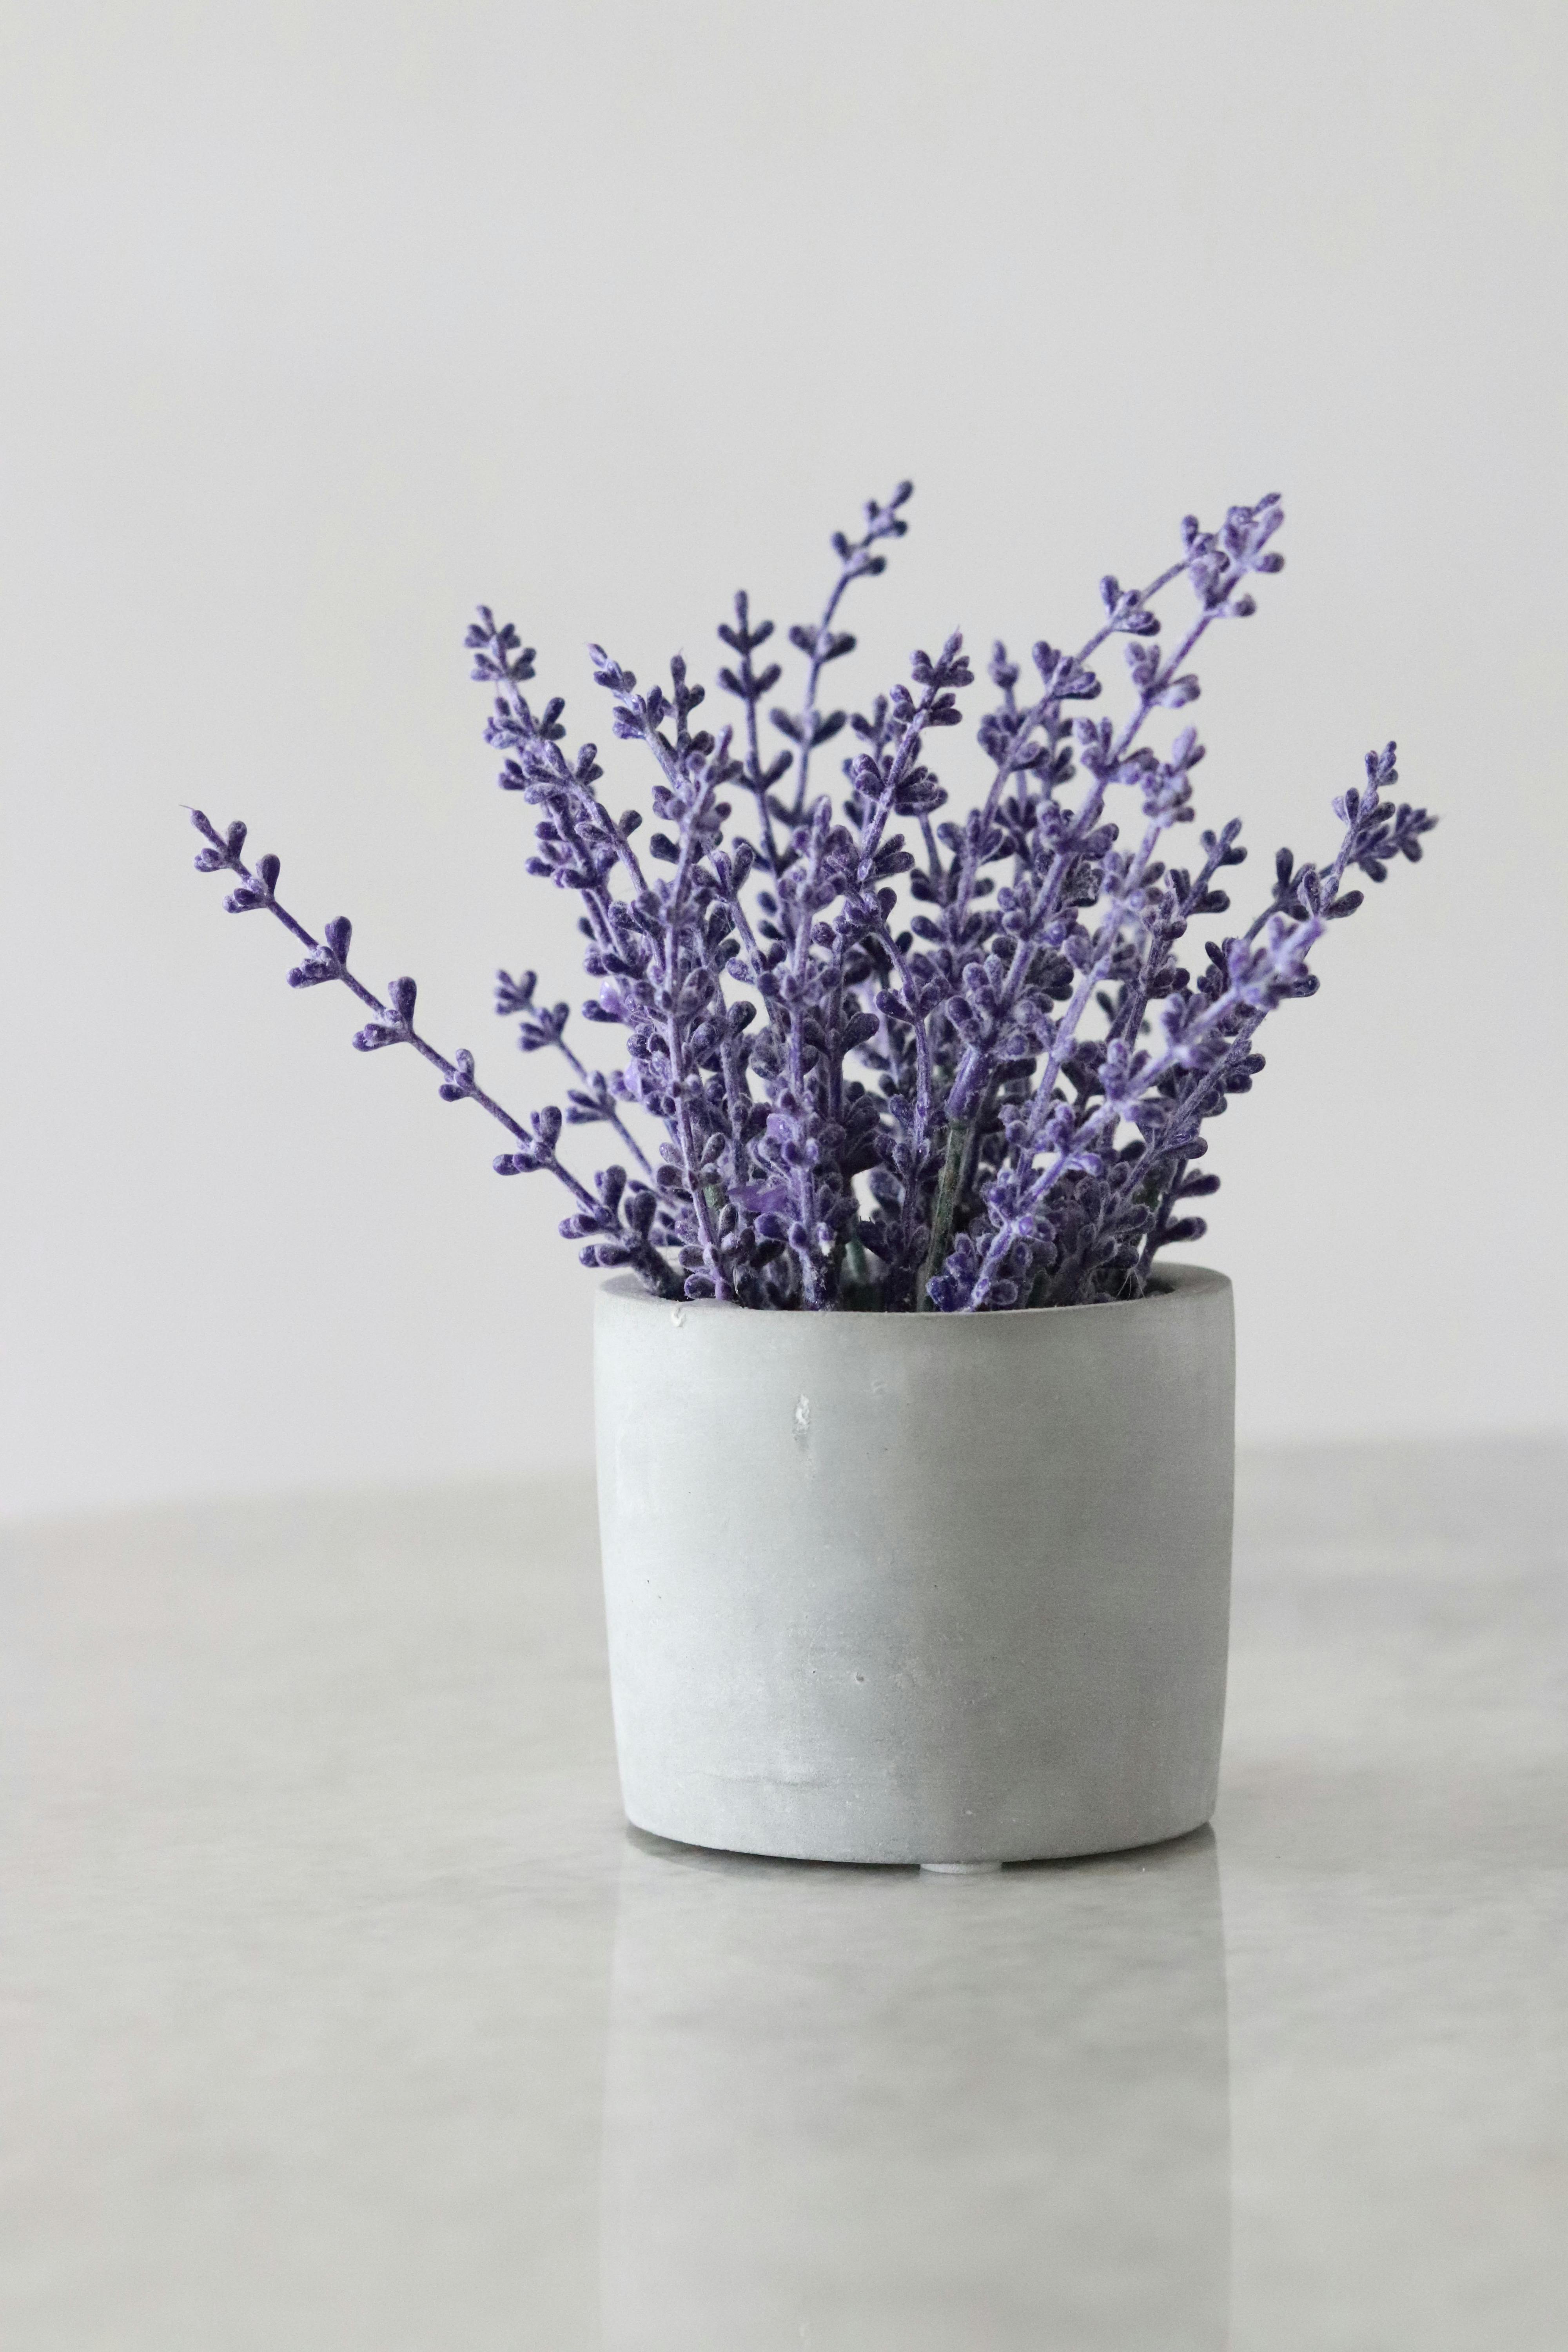 Simple Lavender color solid HD phone wallpaper  Peakpx